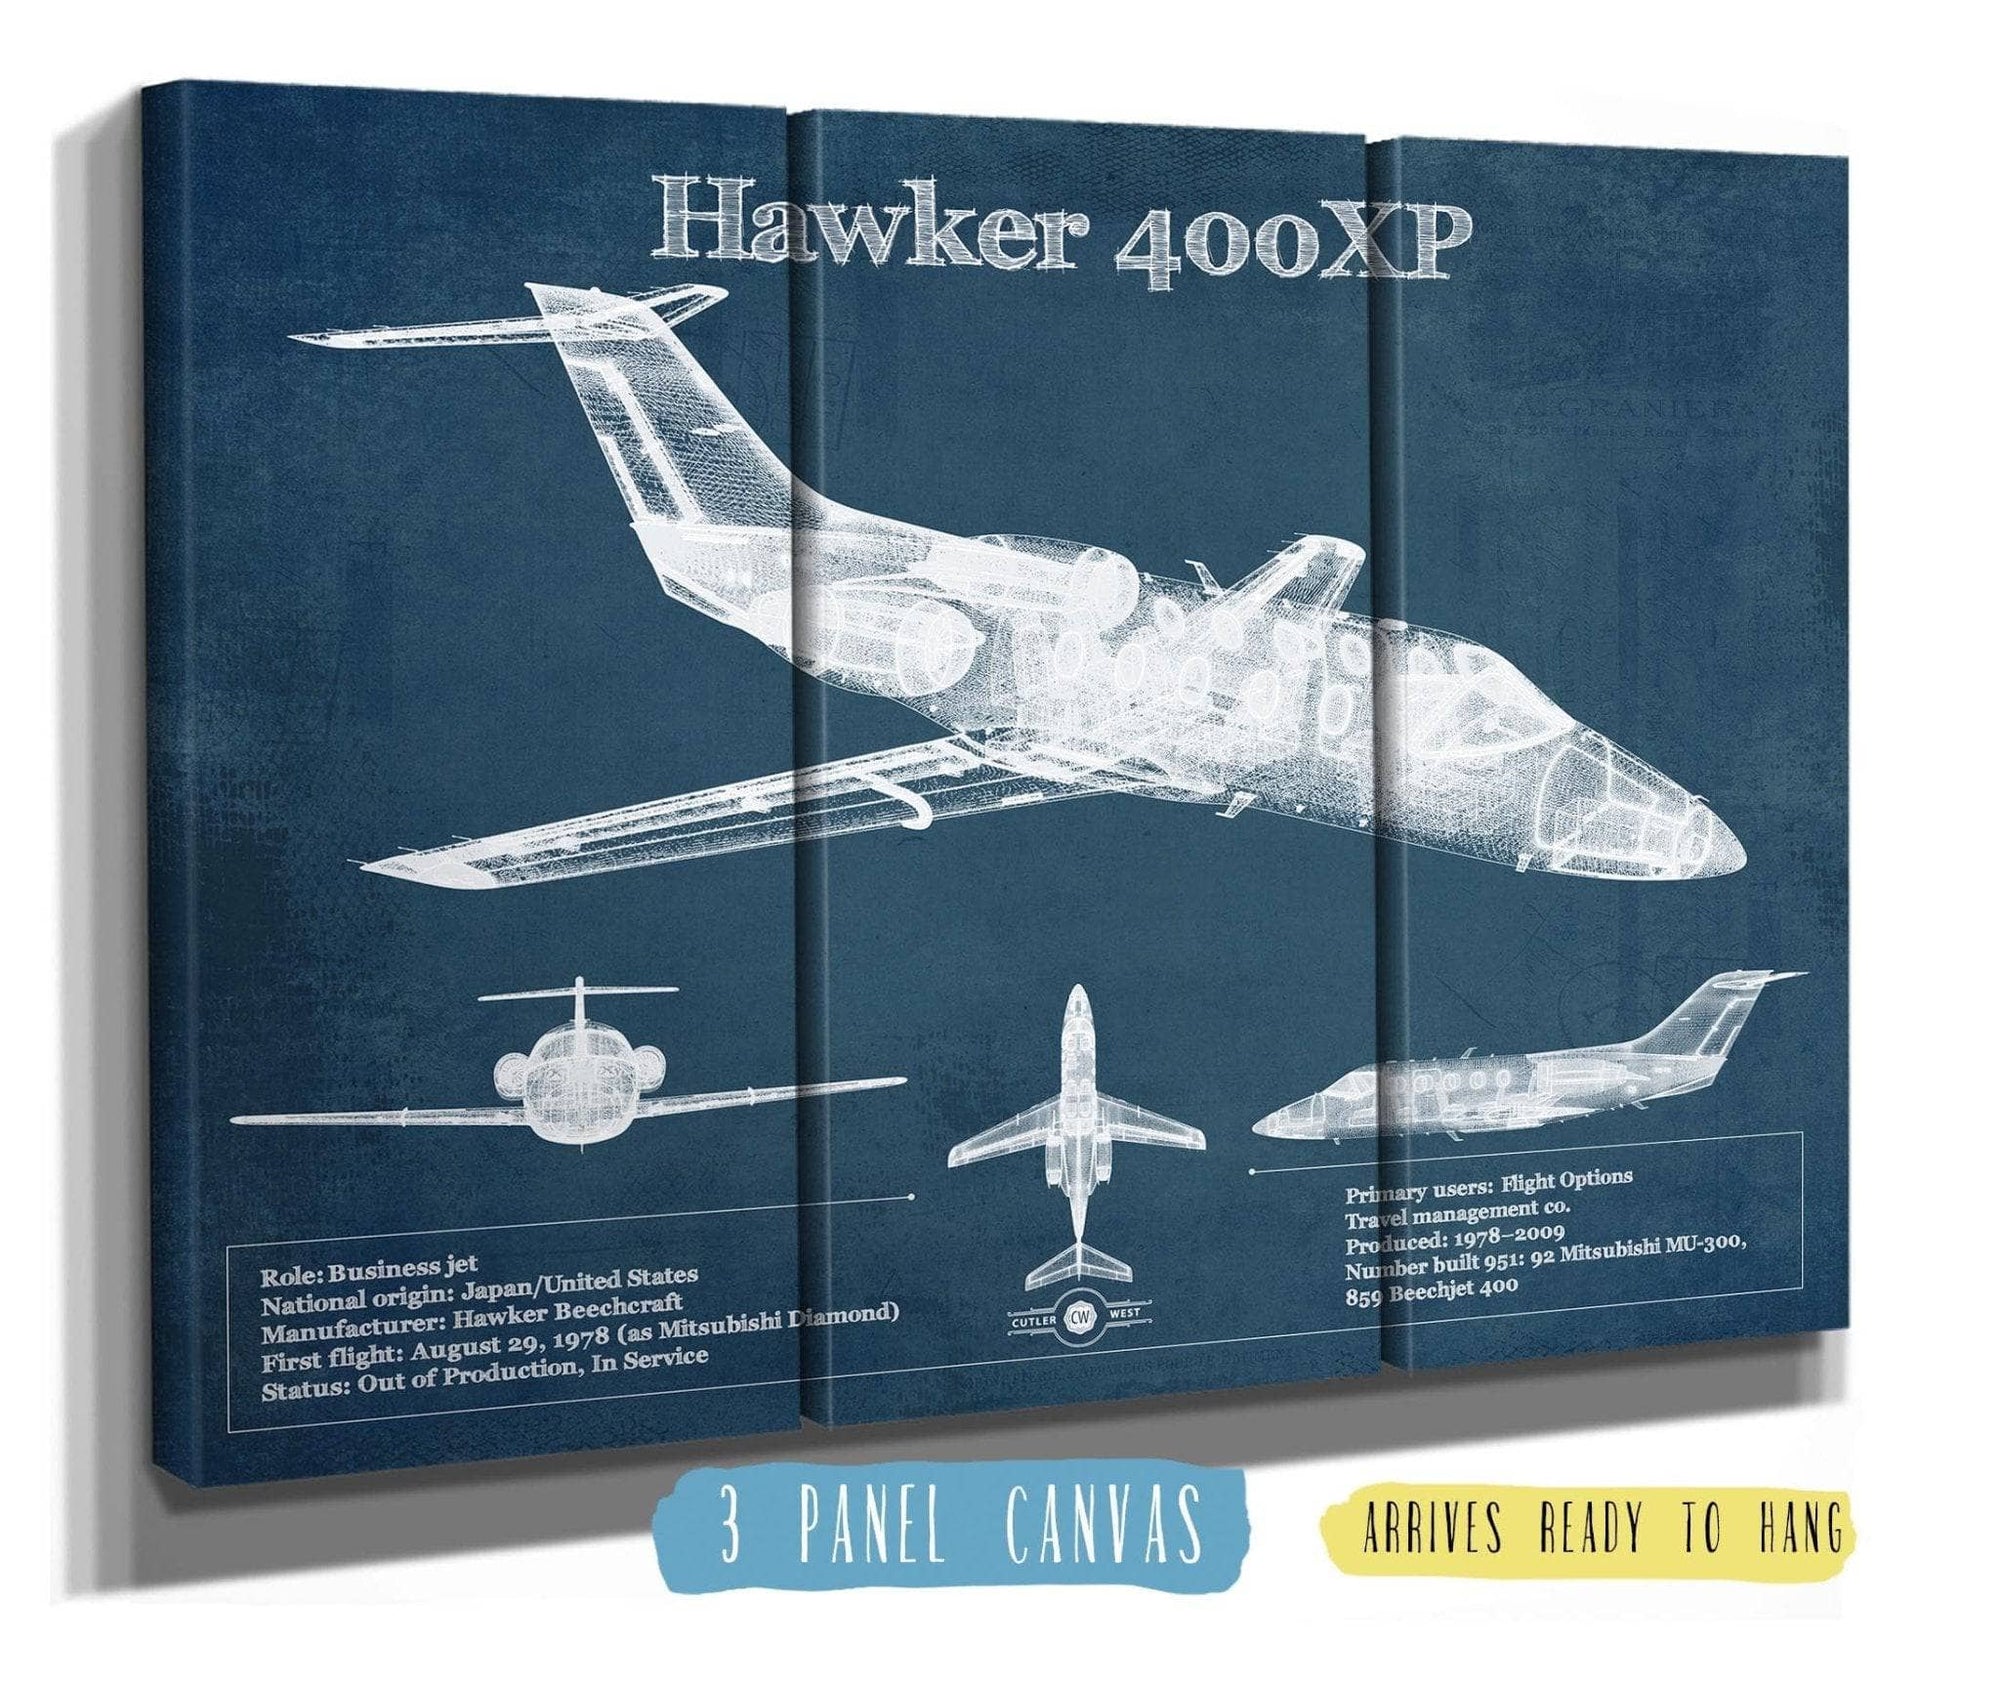 Cutler West Hawker 400XP Vintage Blueprint Airplane Print